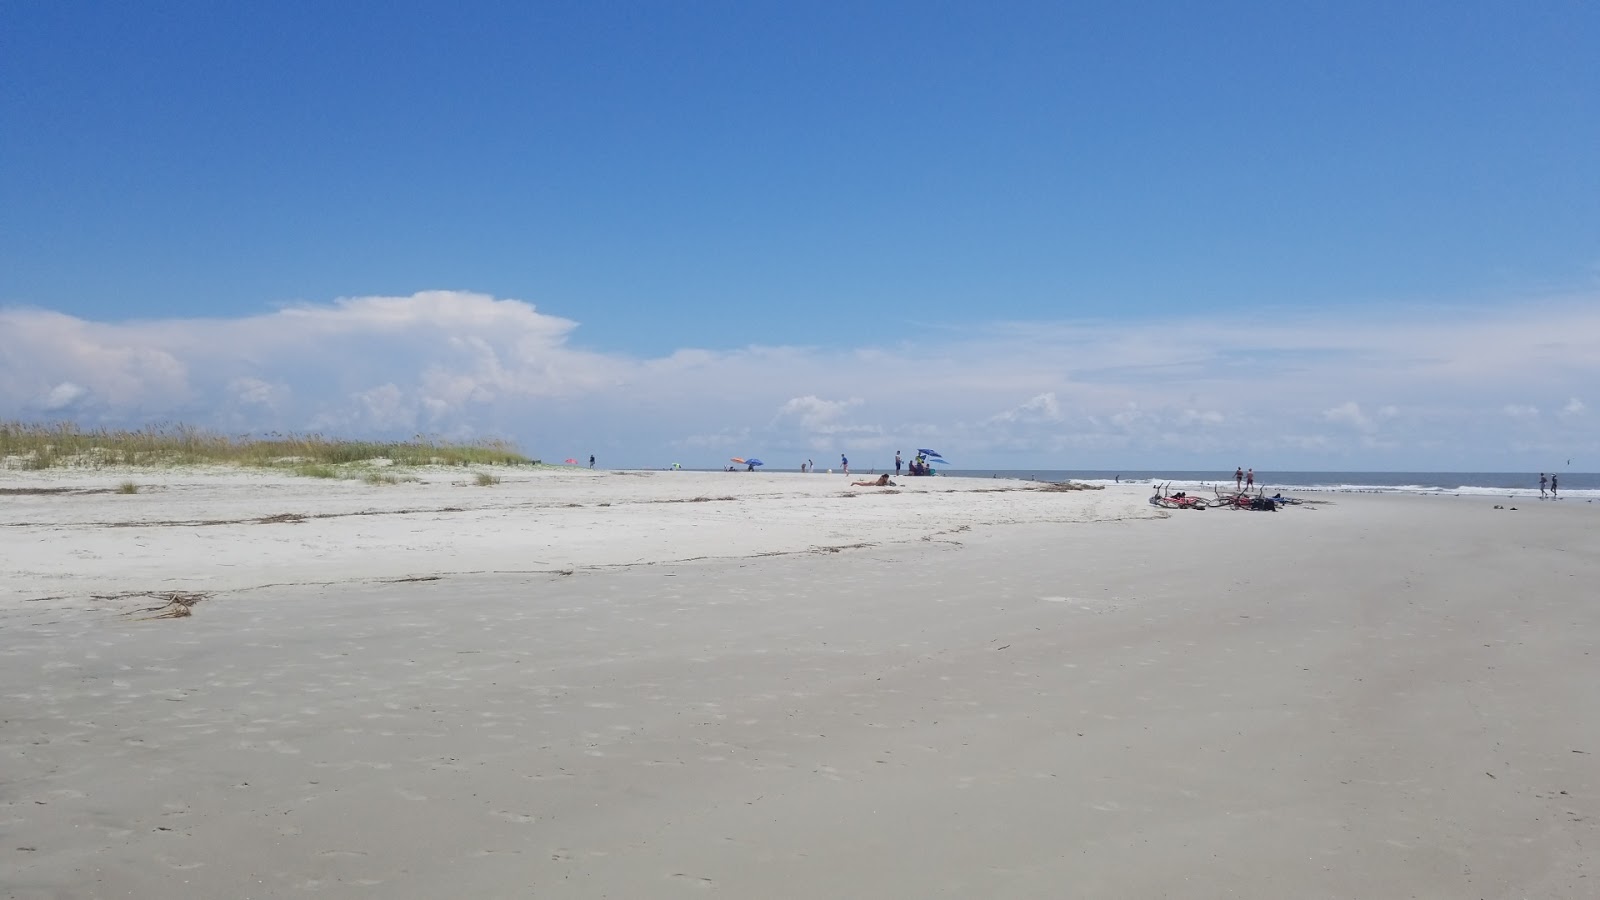 Foto de Burkes beach - lugar popular entre os apreciadores de relaxamento